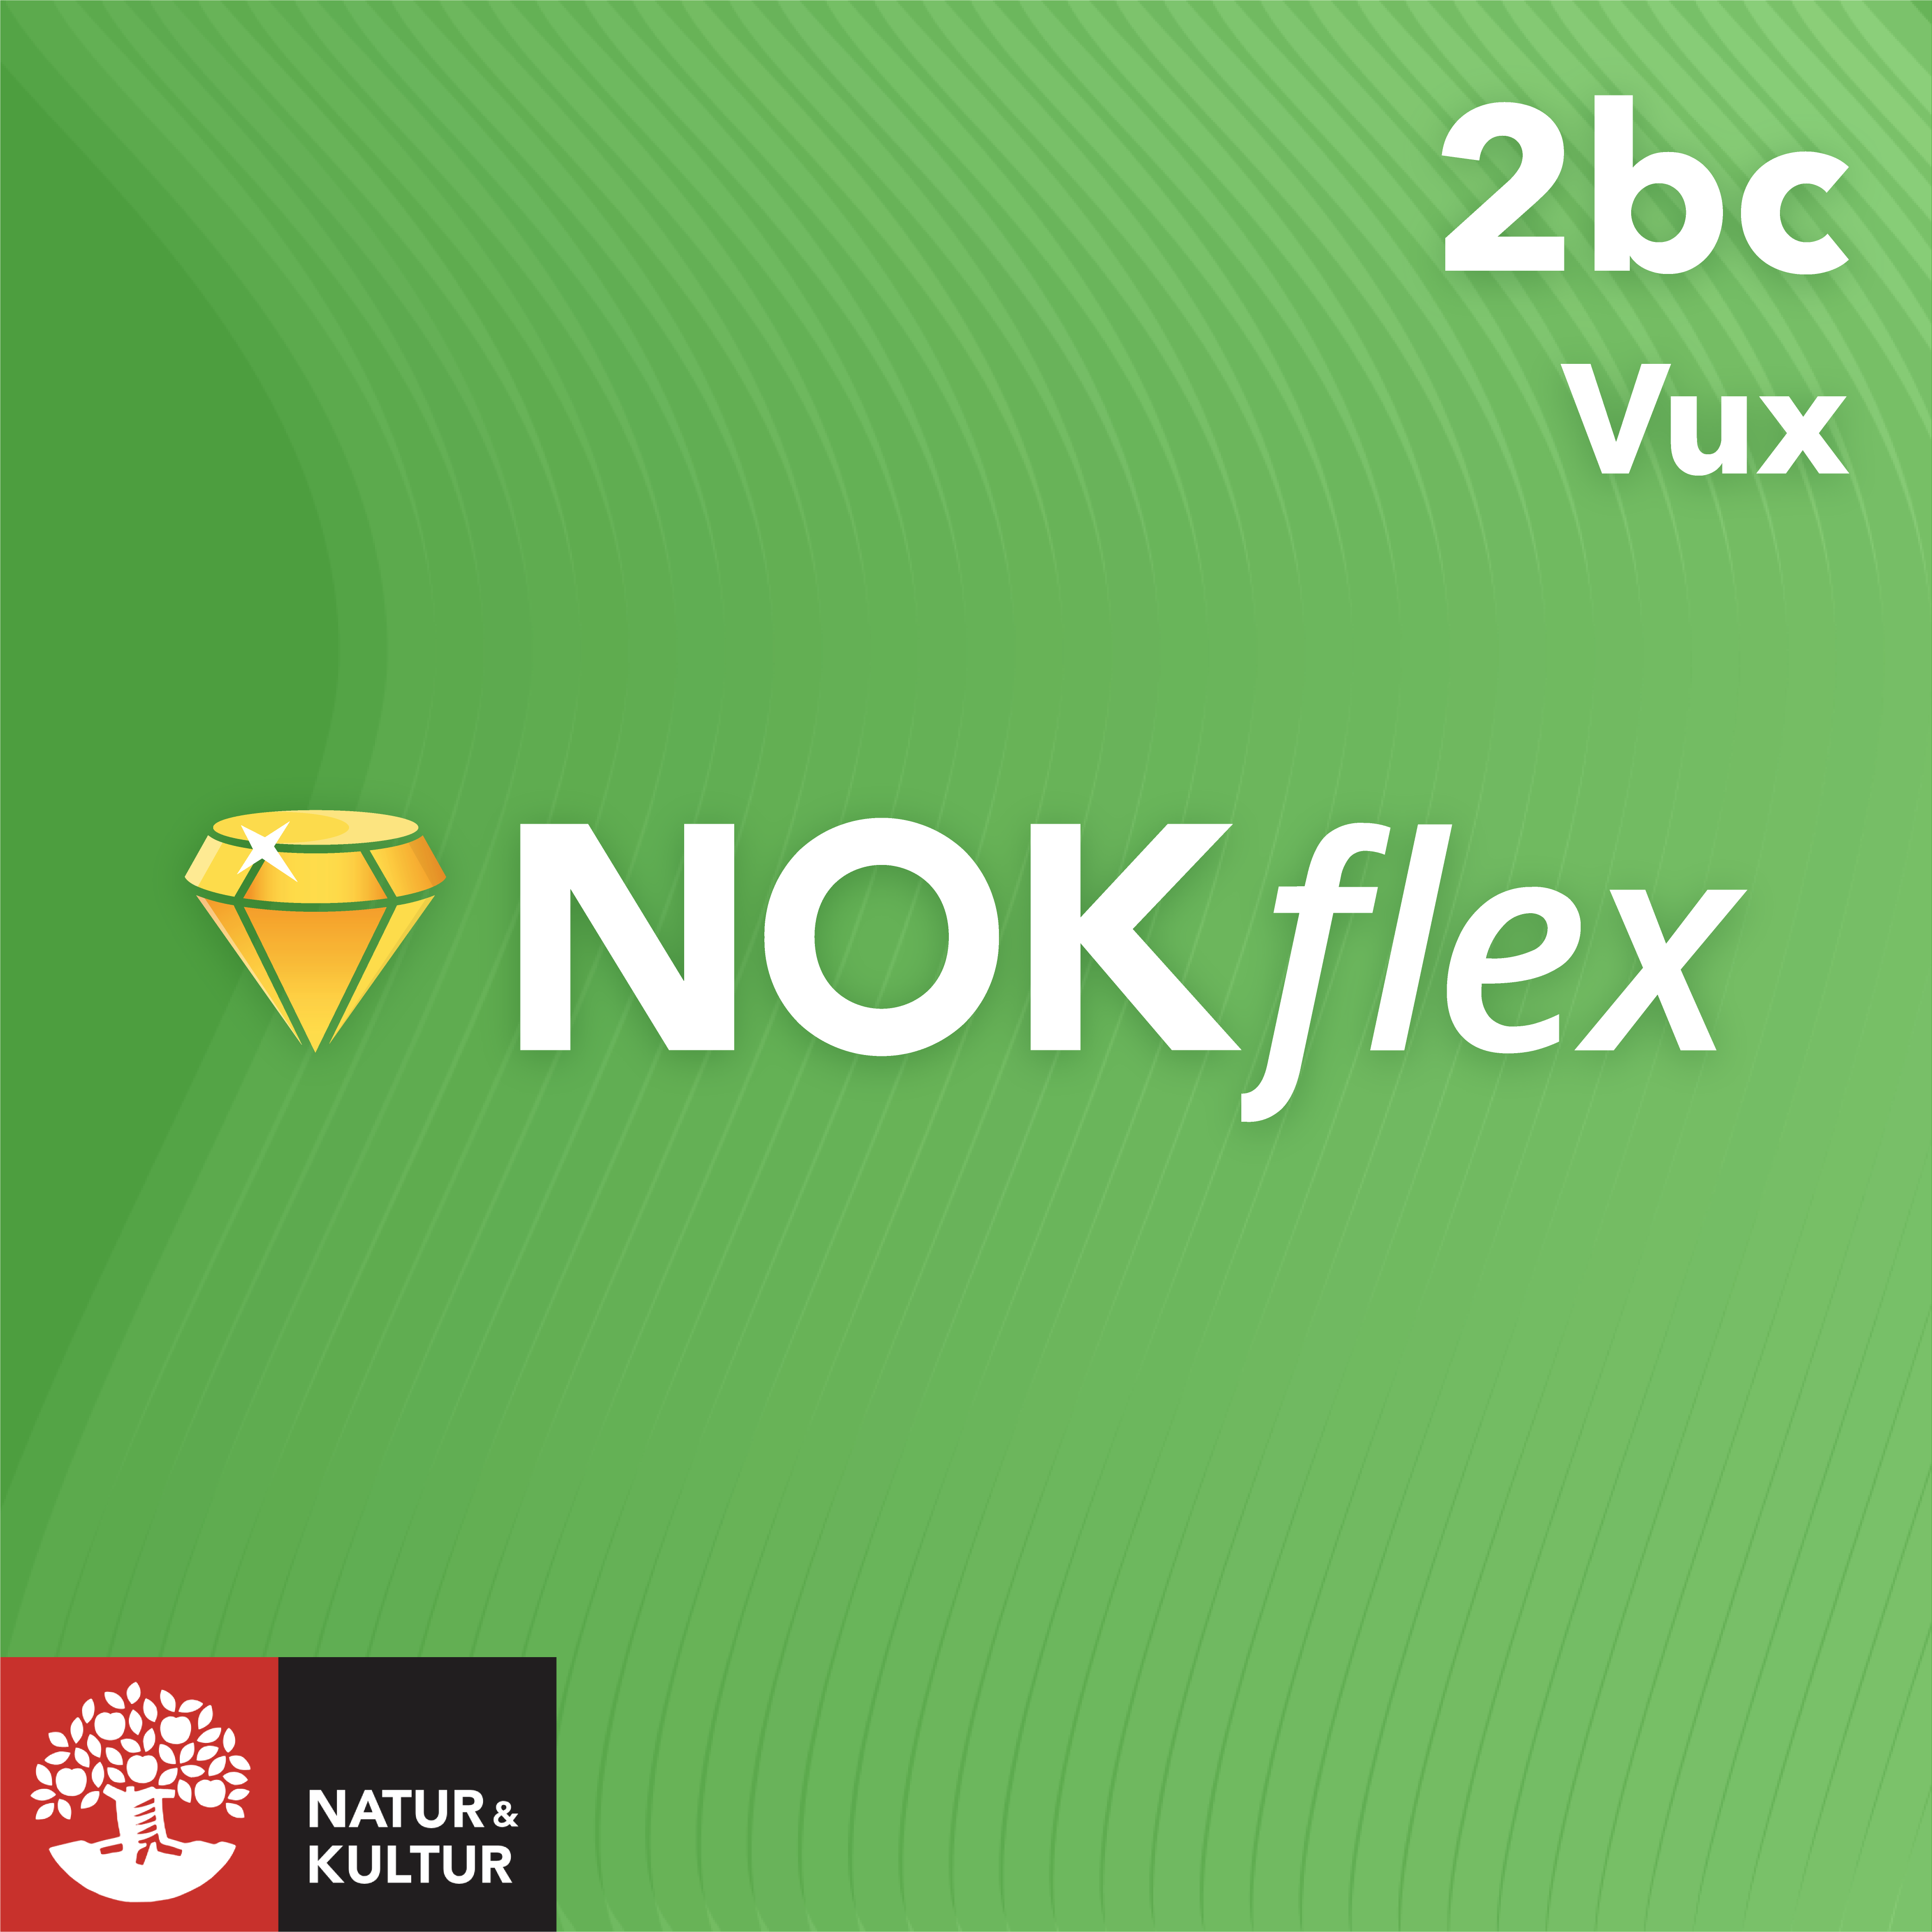 NOKflex Matematik 5000 Kurs 2bc Vux